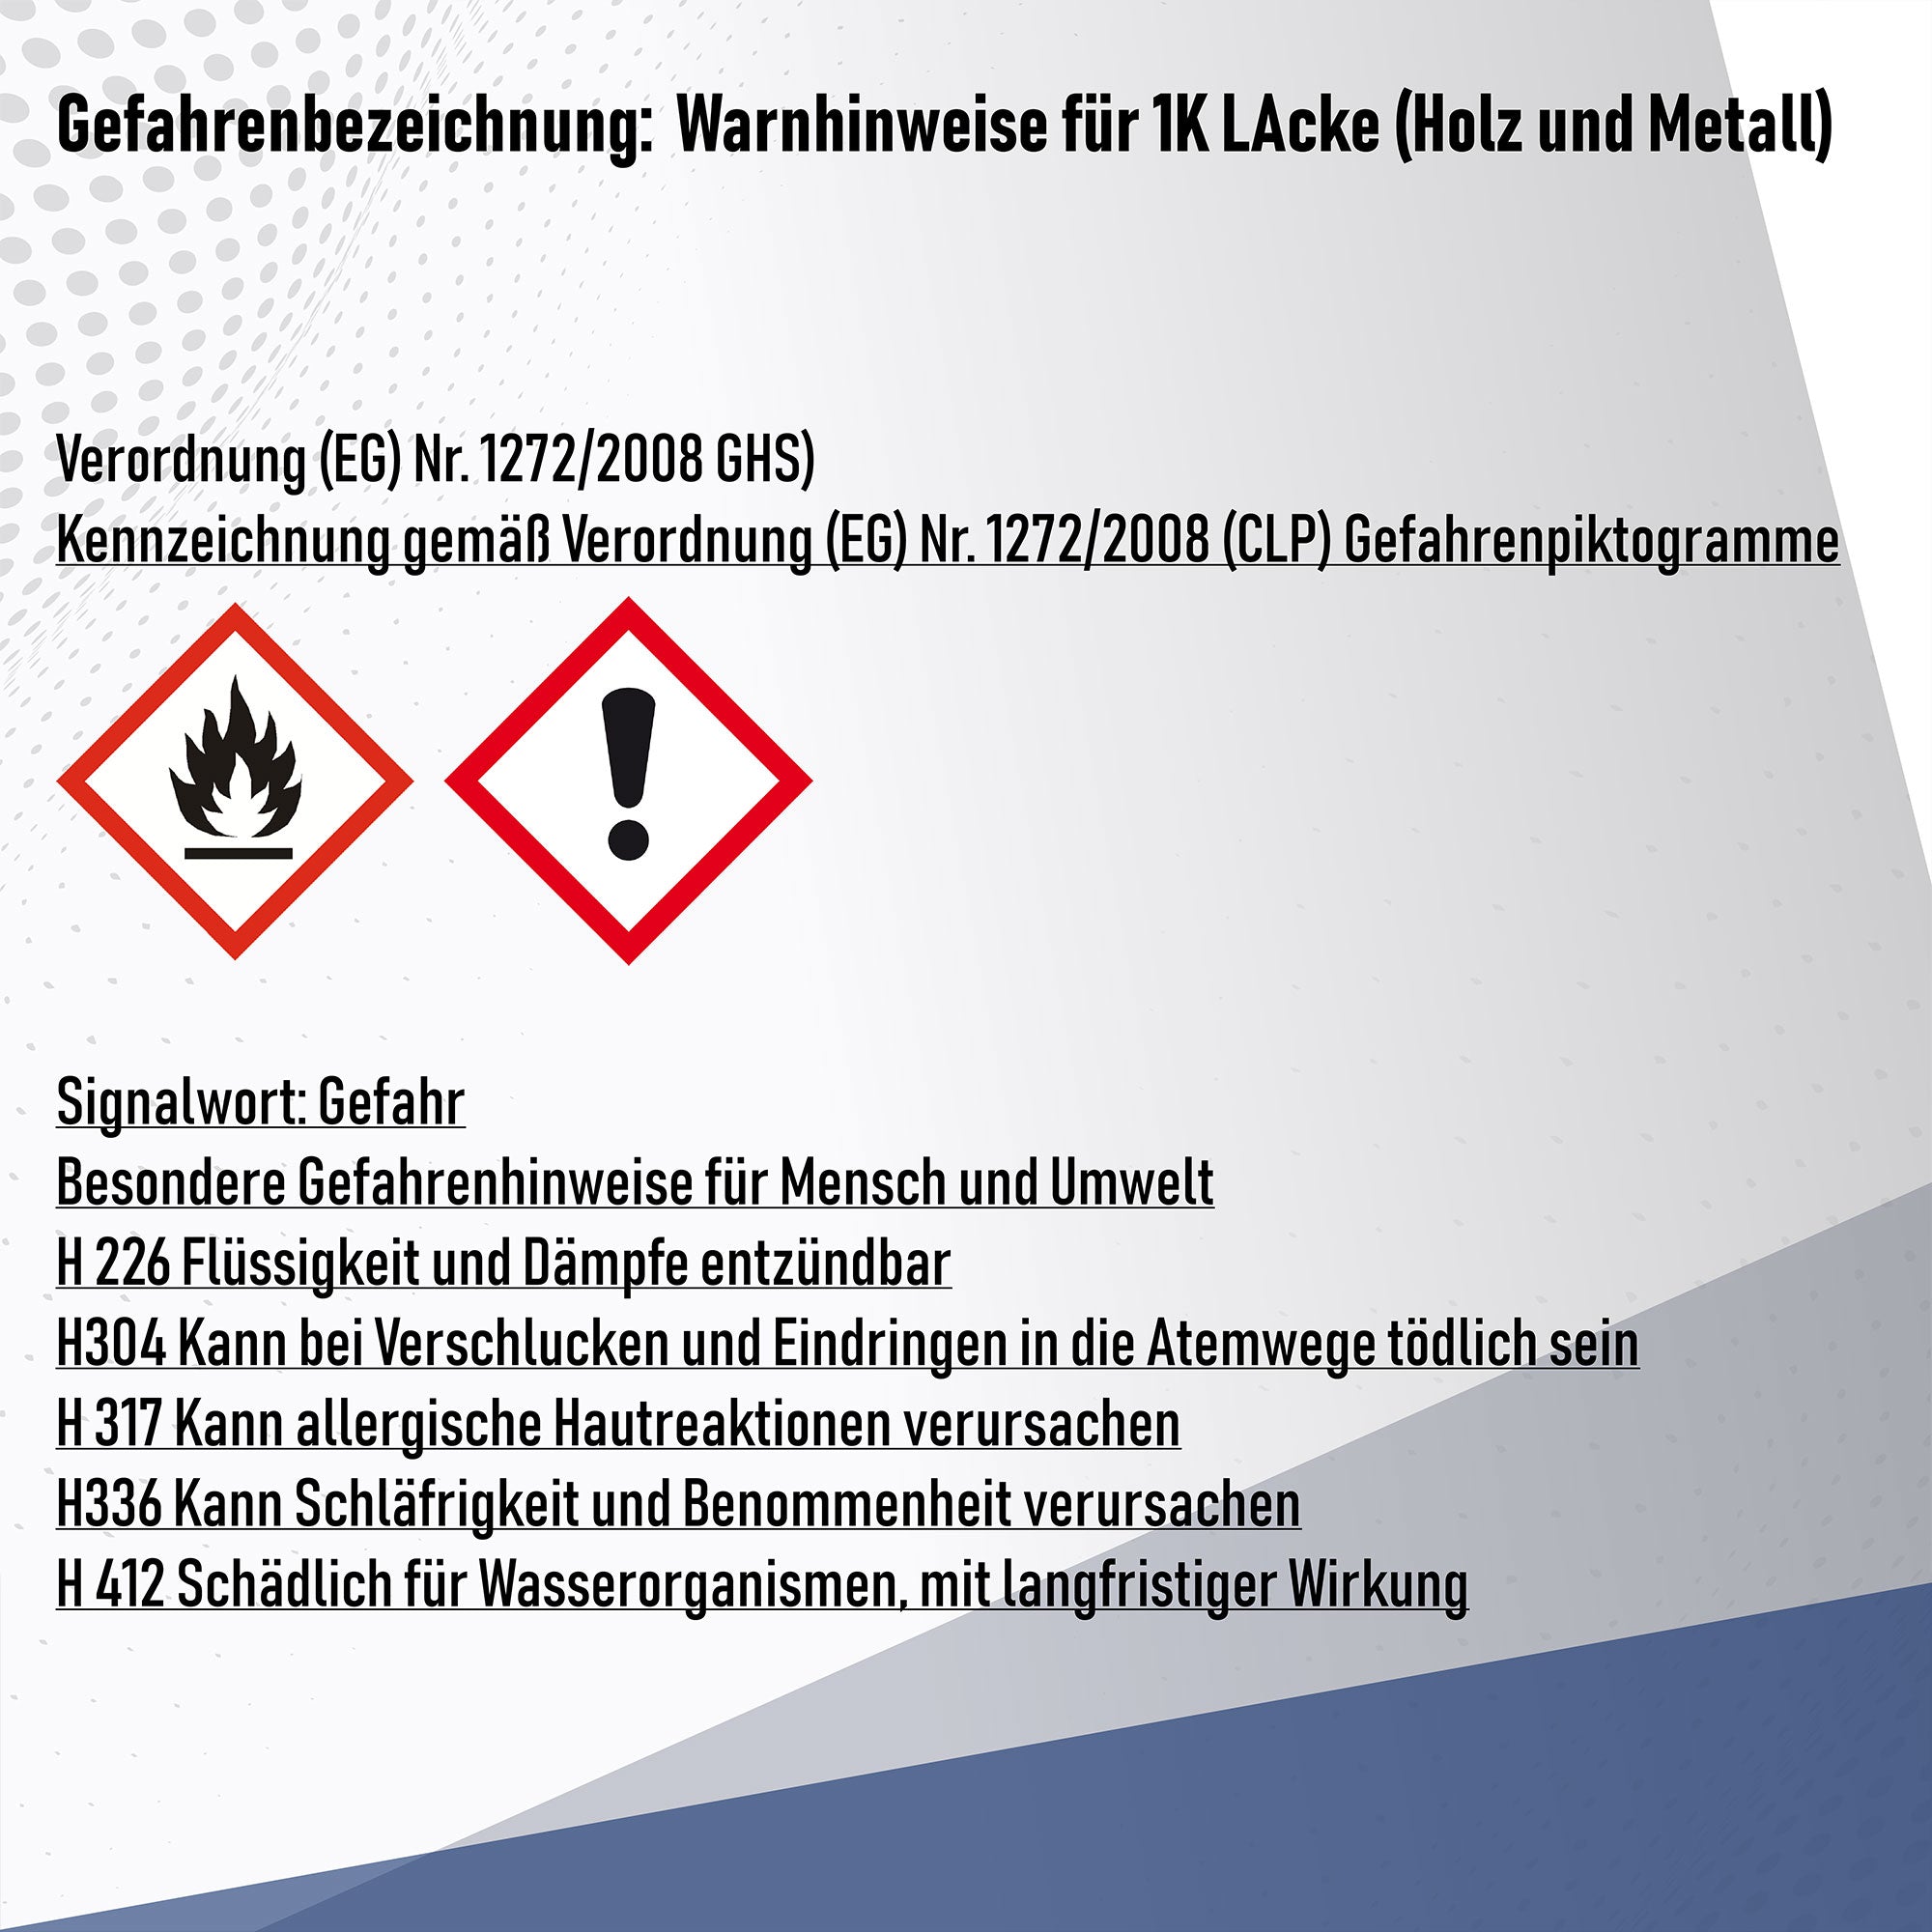 Hamburger Lack-Profi Buntlack in Rehbraun RAL 8007 mit Lackierset (X300) & Verdünnung (1 L) - 30% Sparangebot